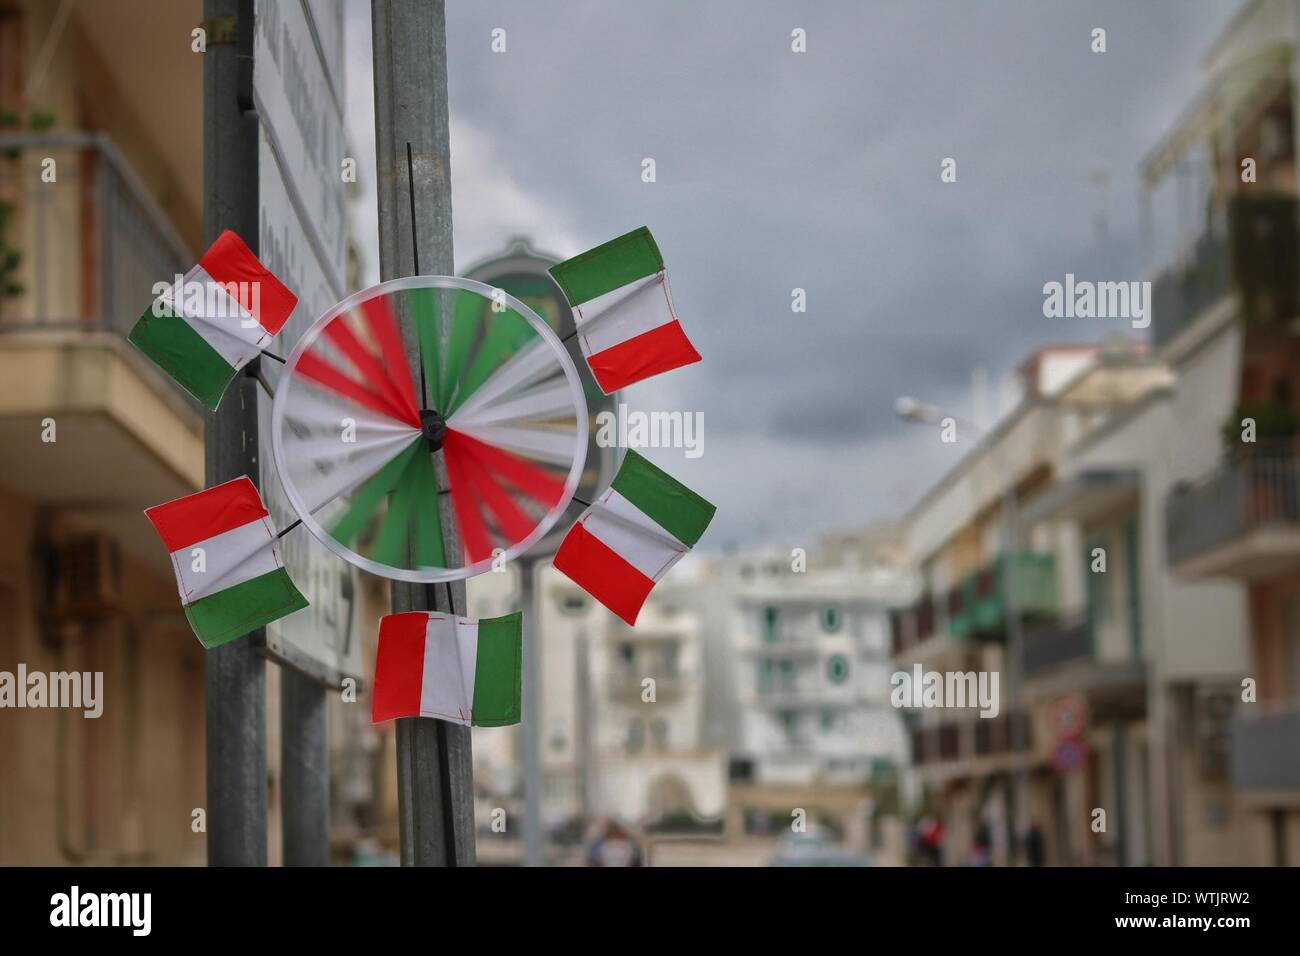 Italian Flag Pinwheel Toy On Pole In City Stock Photo